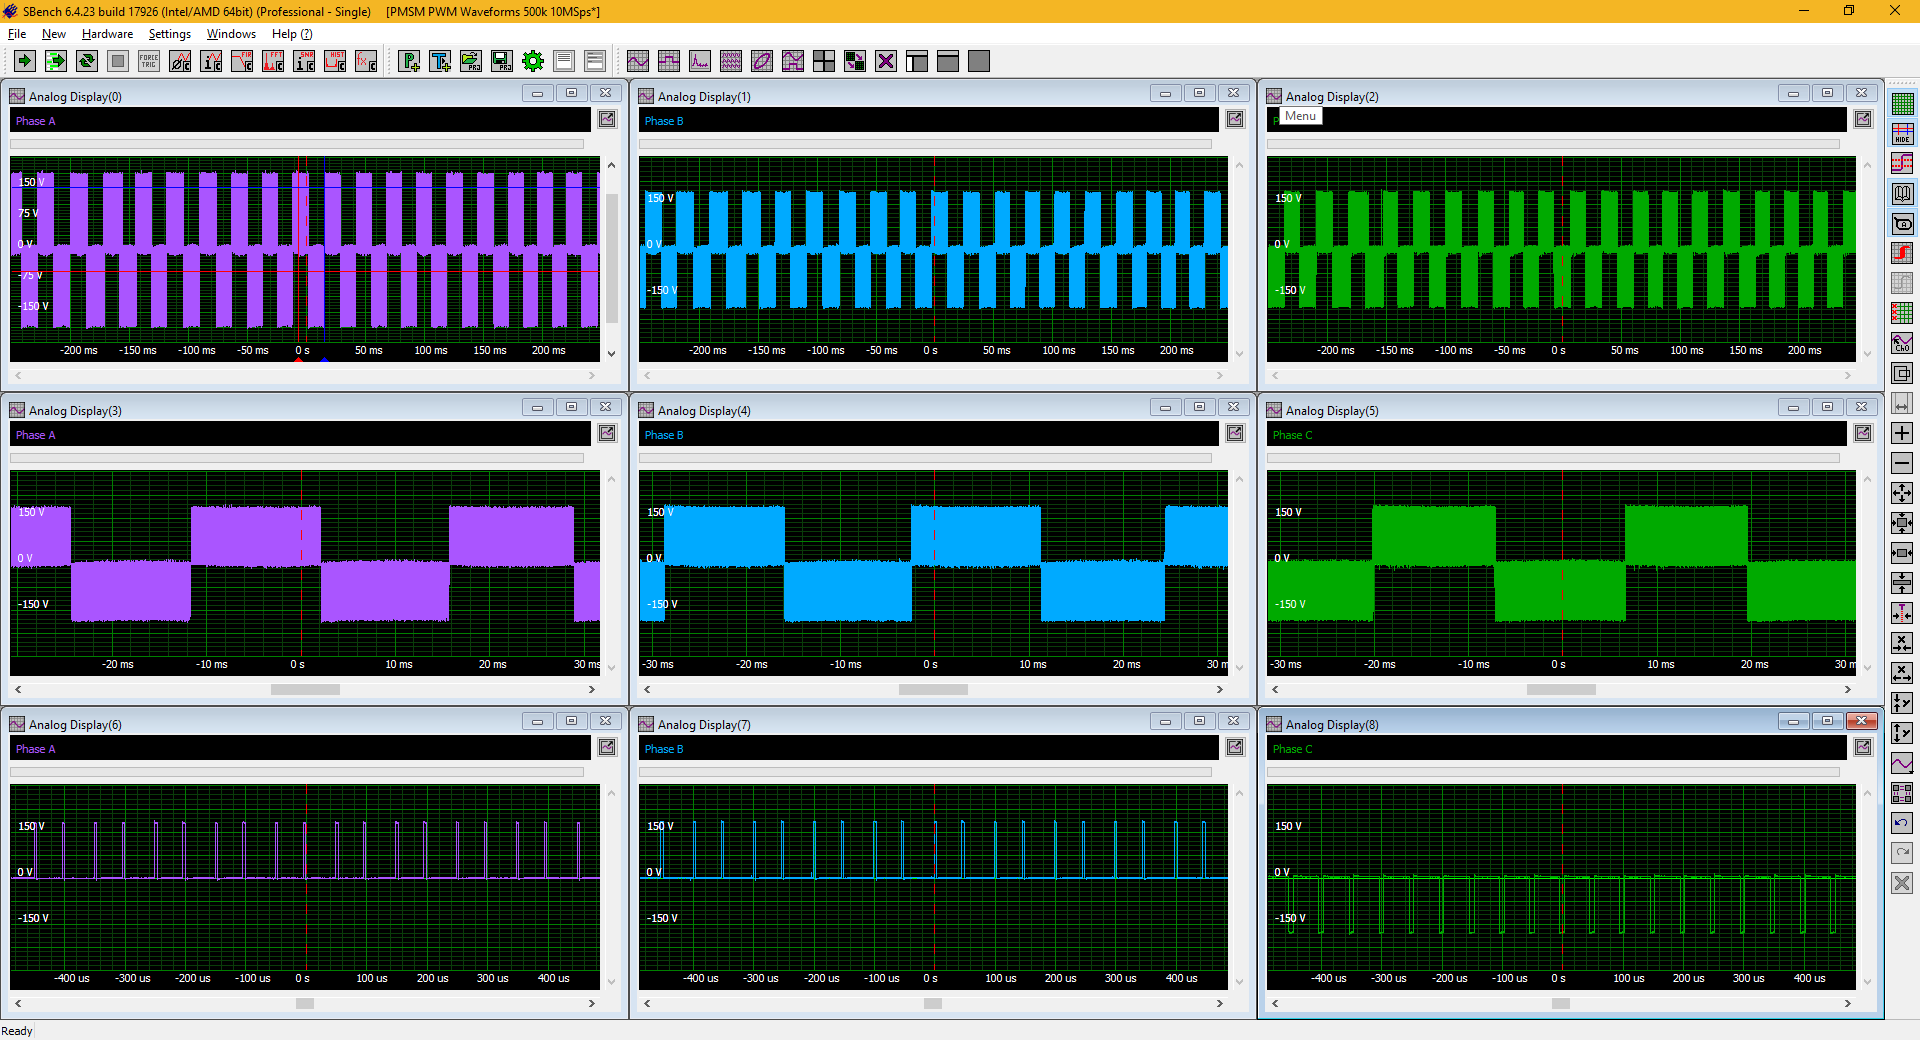 Screenshot of SBench 6 software